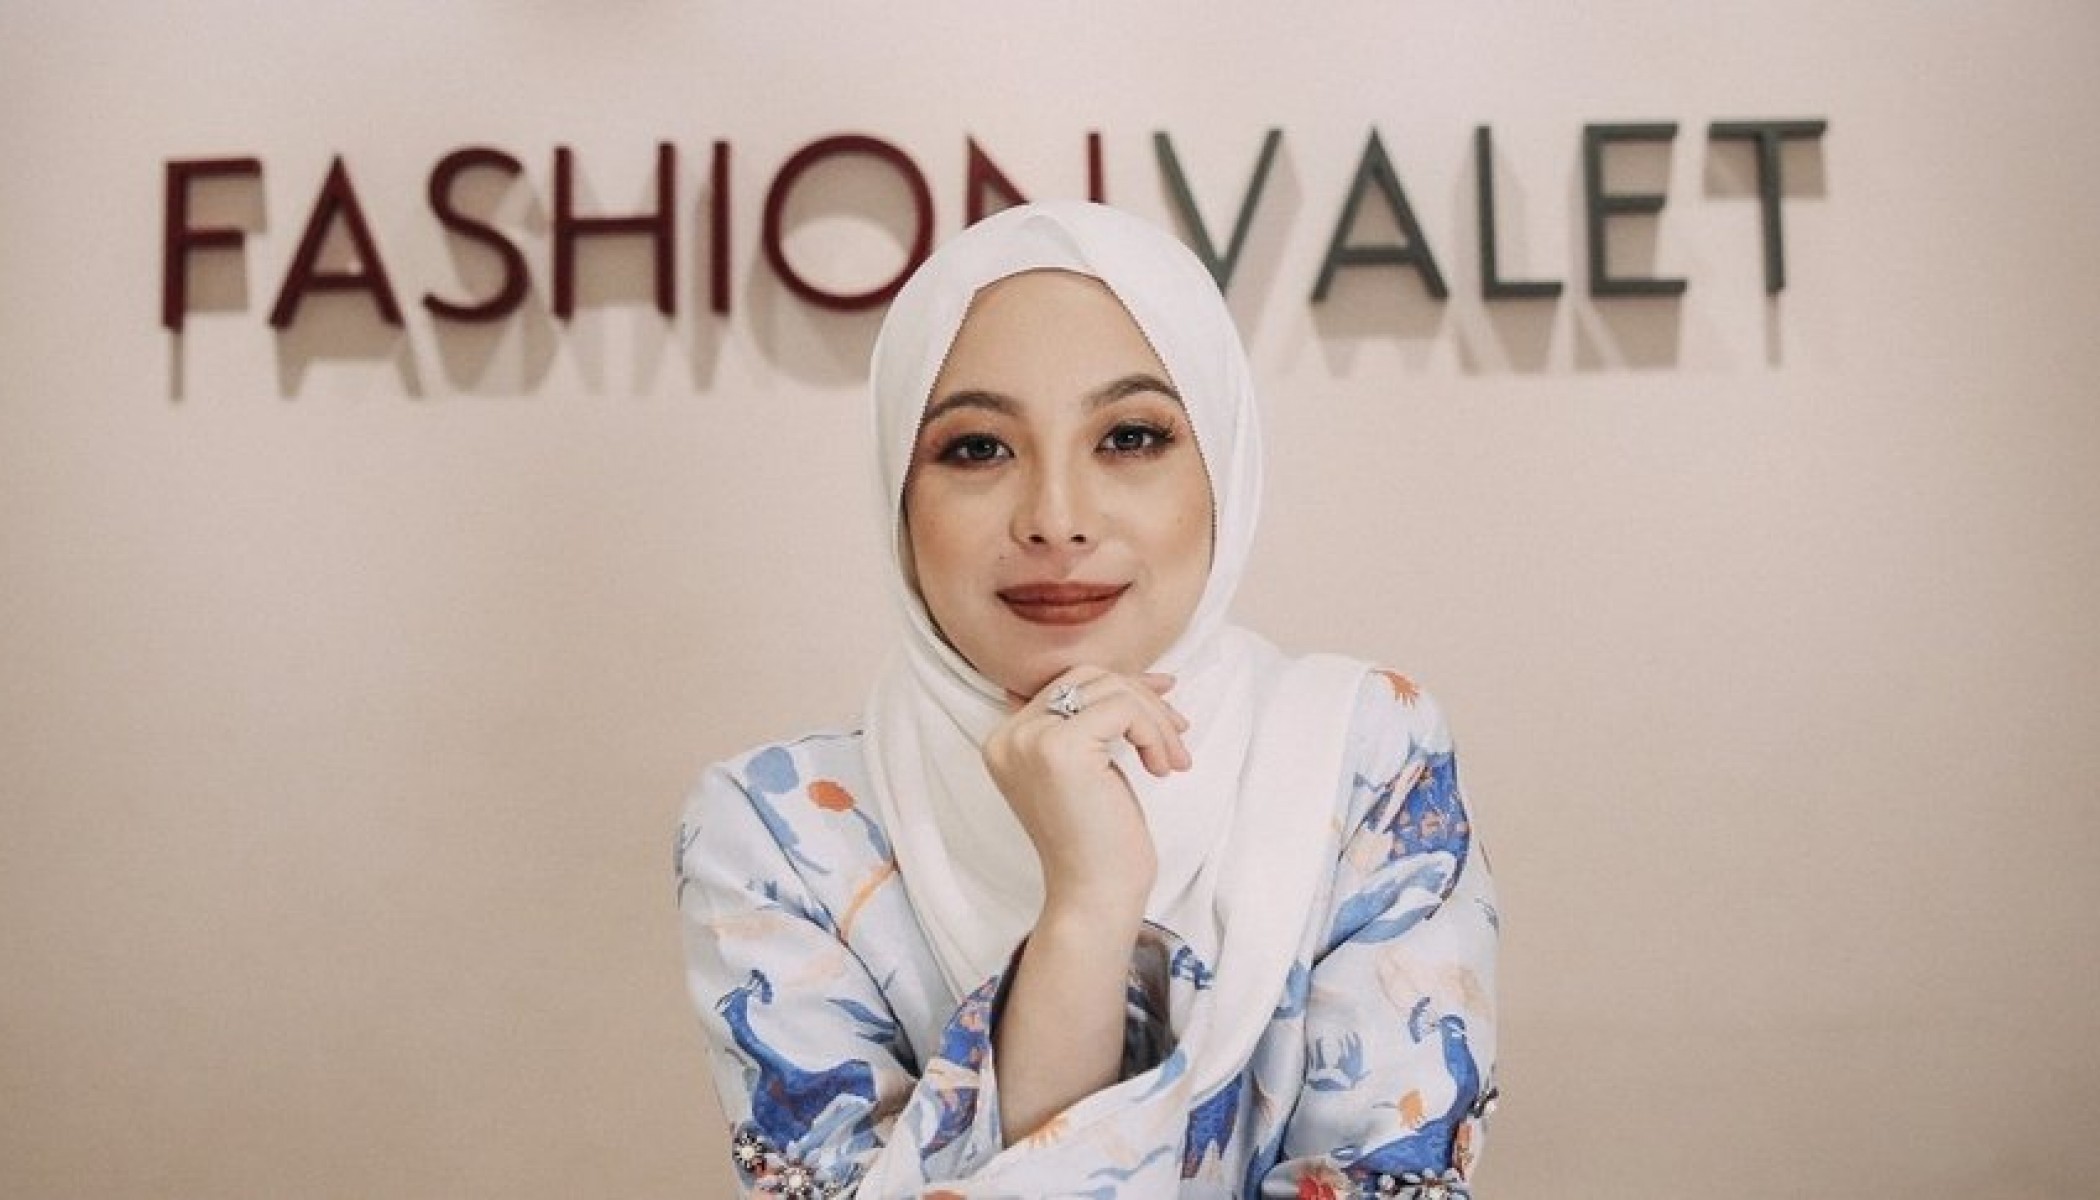 How Fashion Valet Grew Their Malaysian Empire With Digital Marketing - Skale